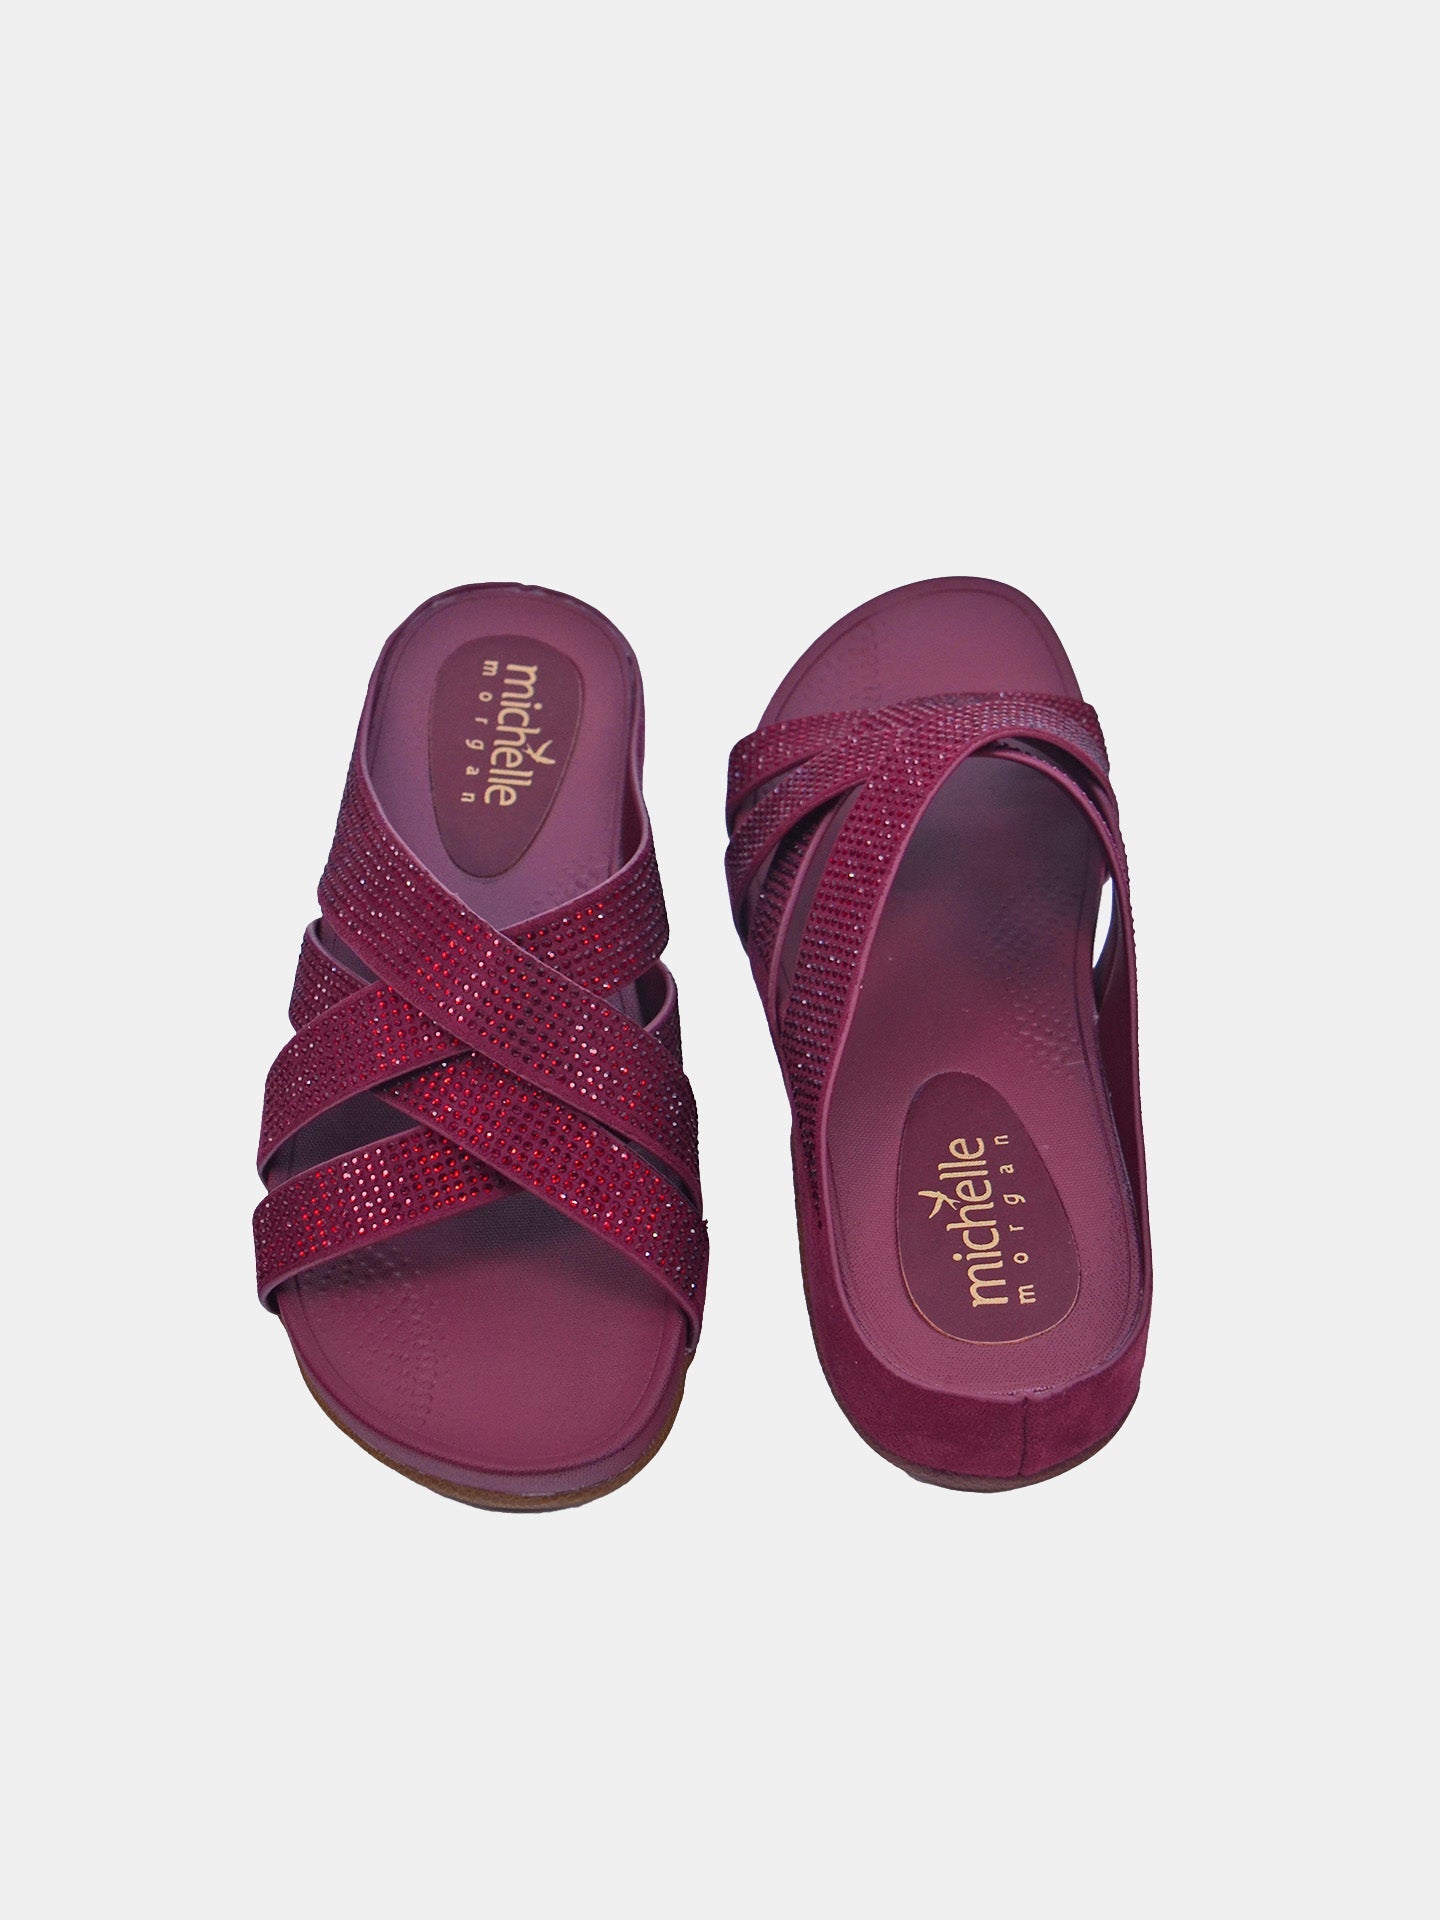 Michelle Morgan 114RC278 Women's Casual Sandals #color_Maroon